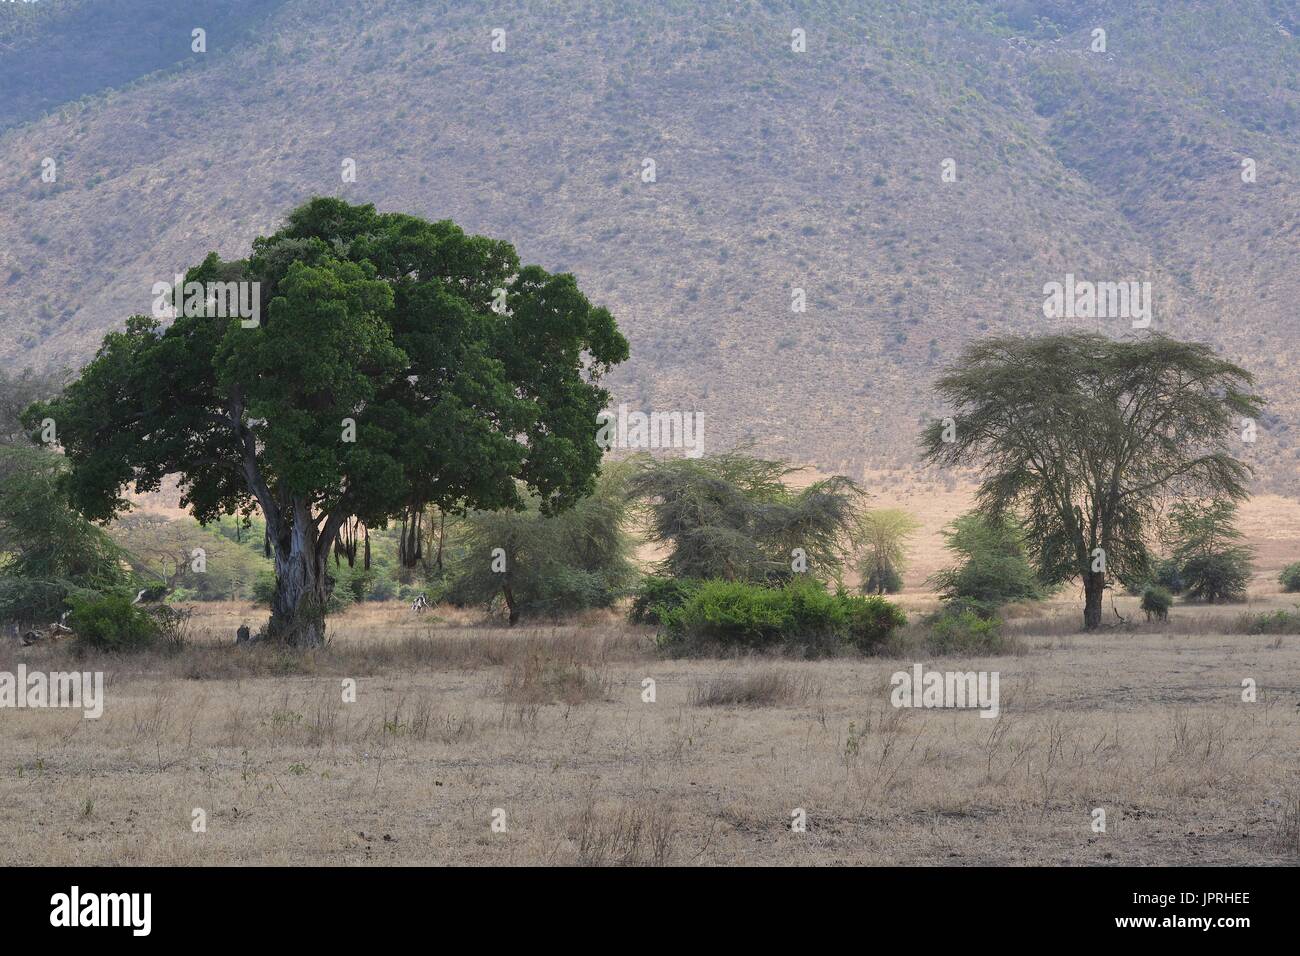 African Safari Landscape in Tanzania Stock Photo